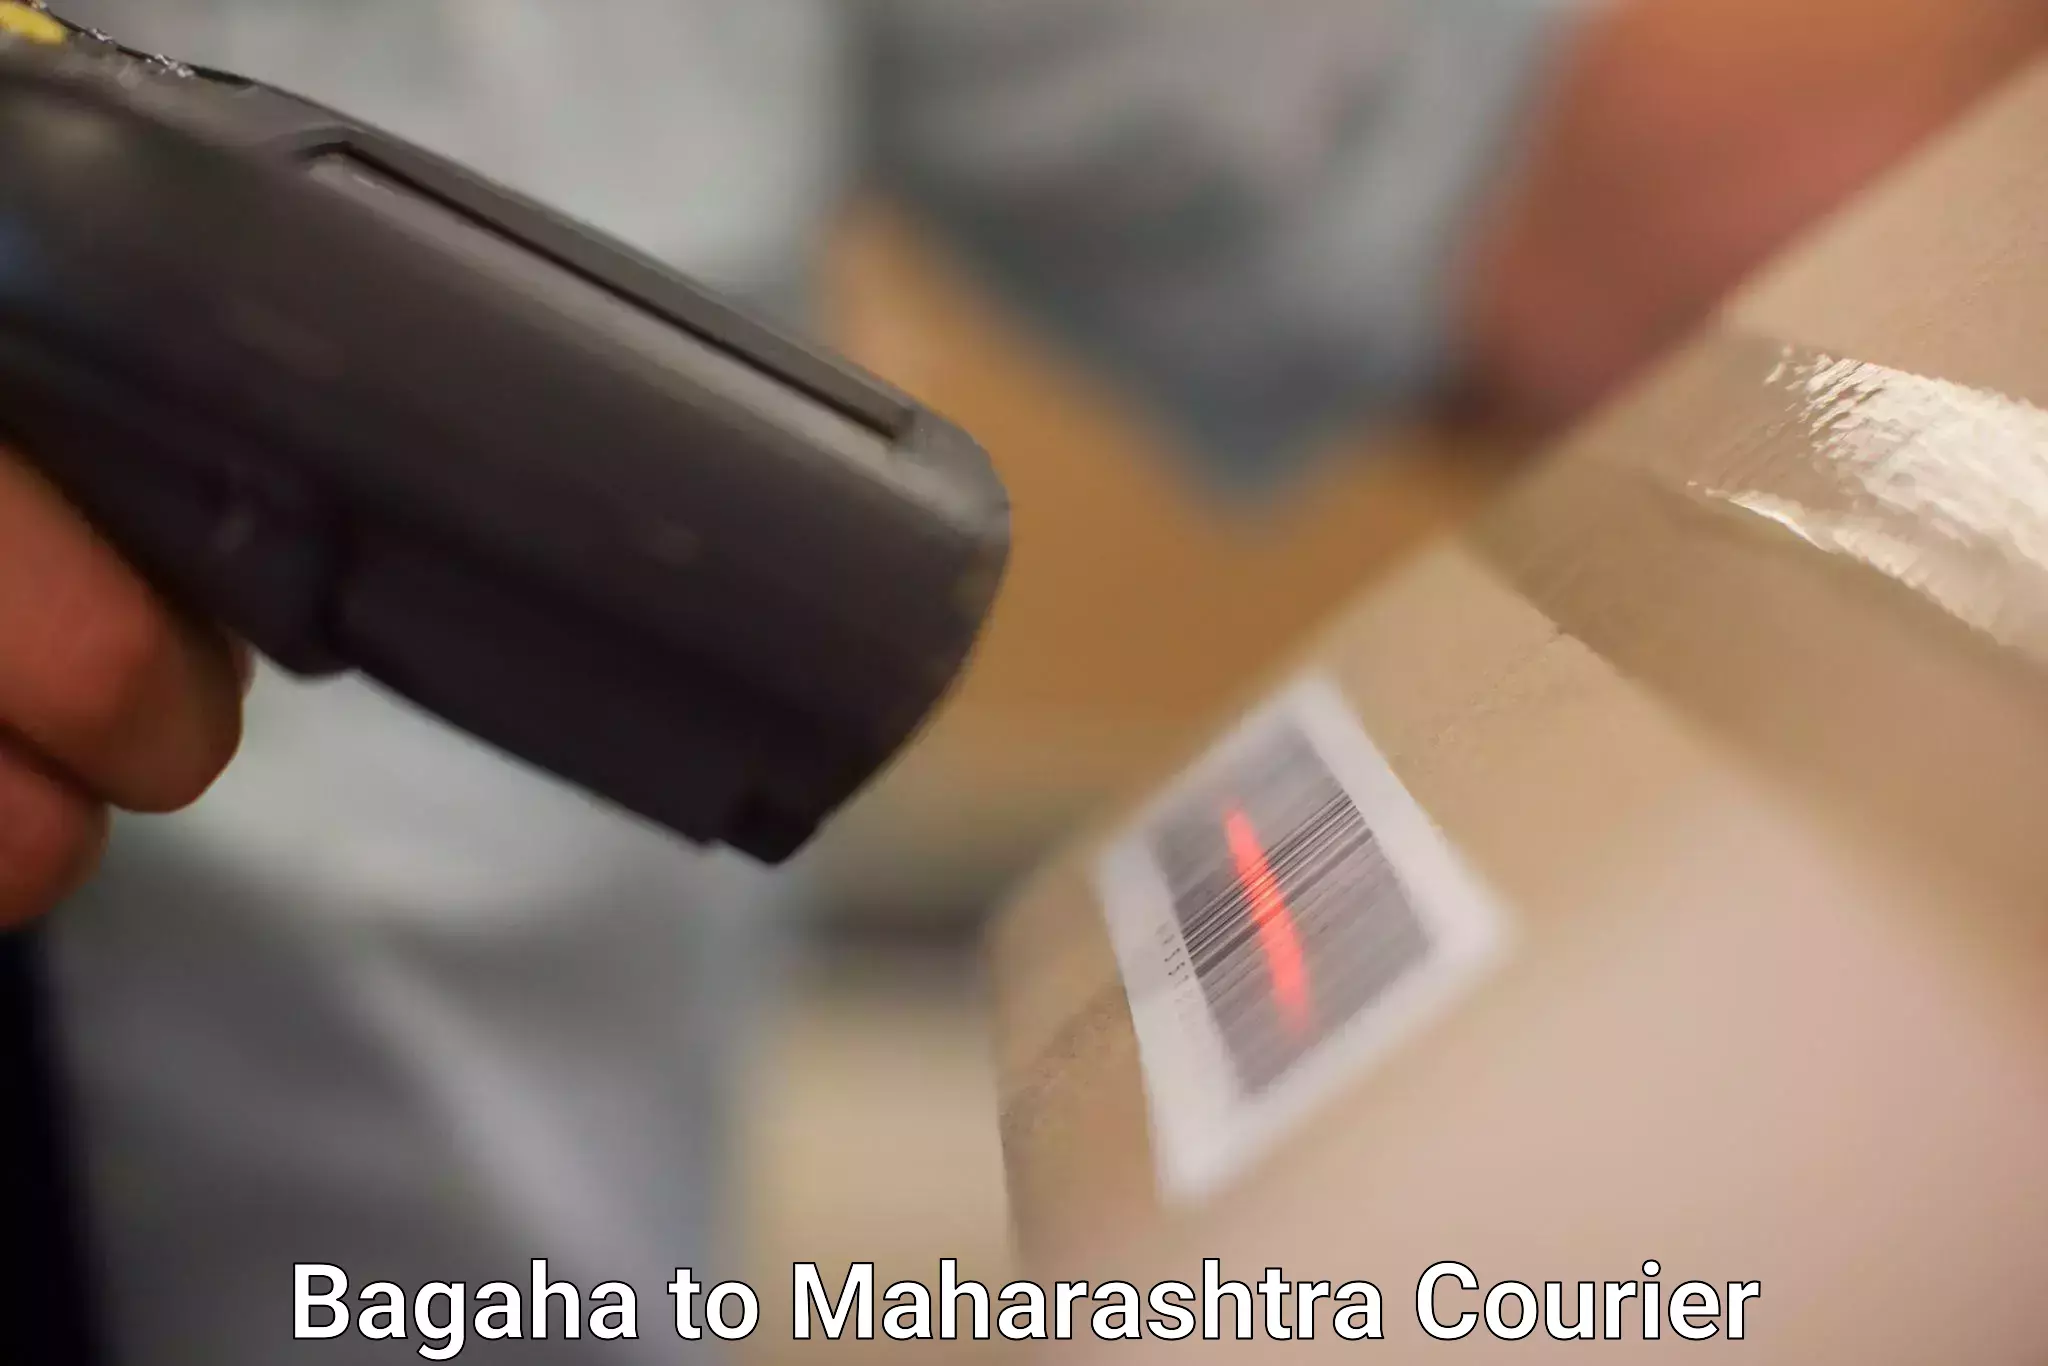 Easy access courier services Bagaha to Maharashtra